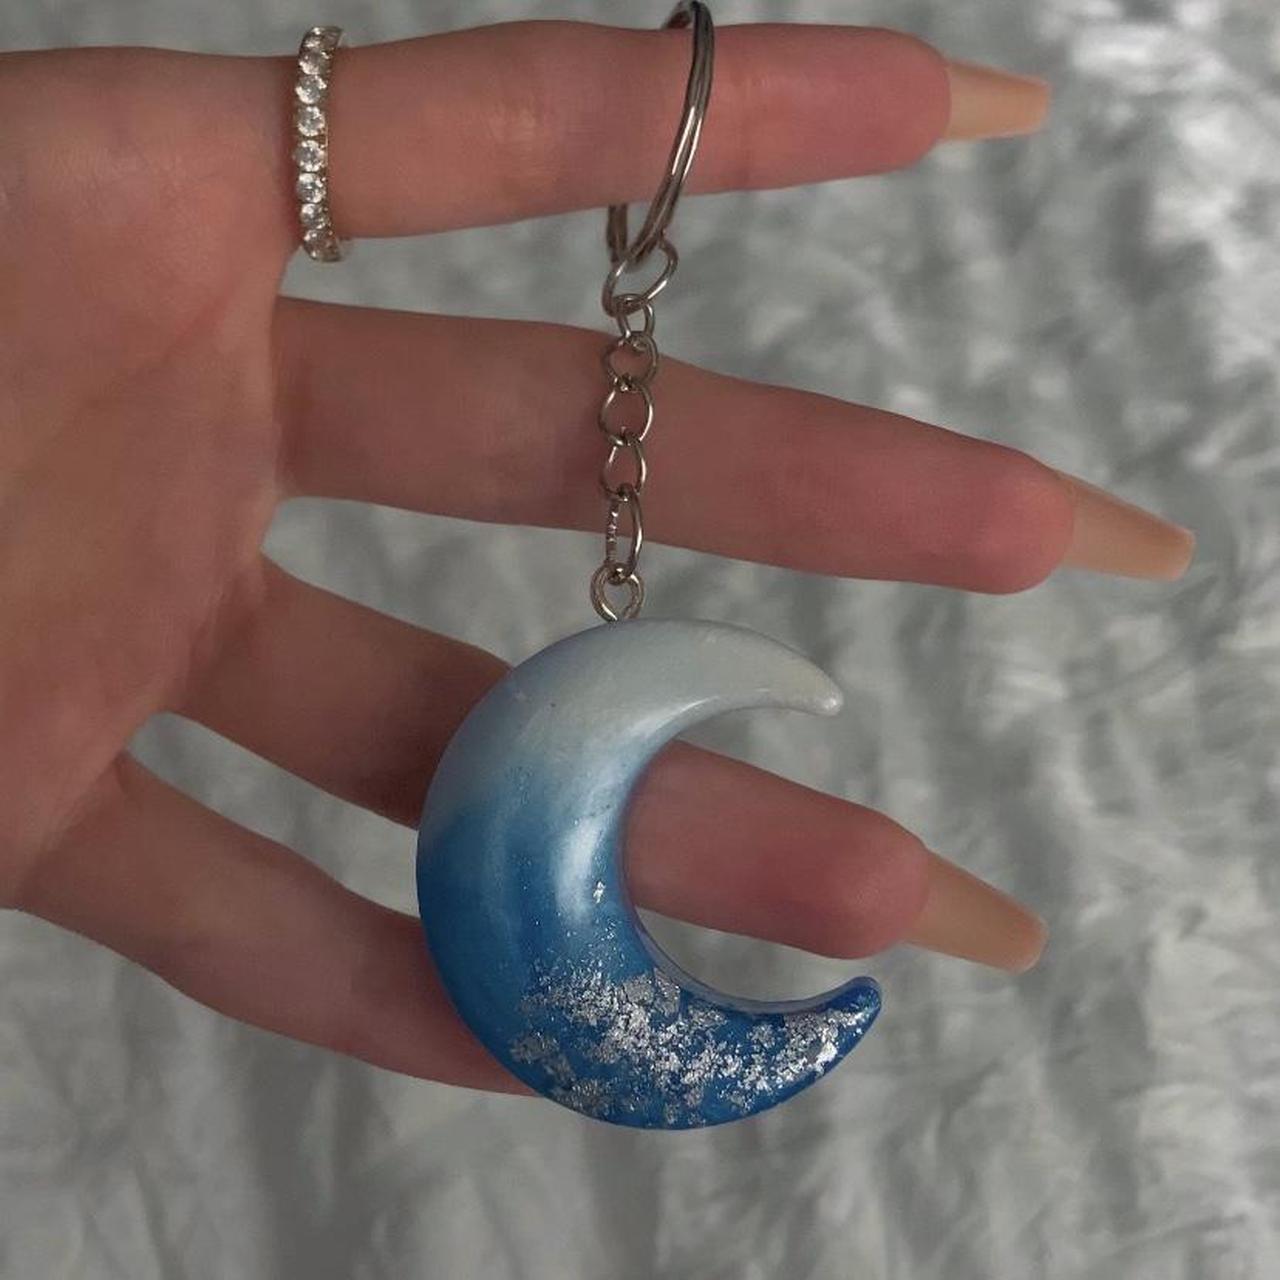 Moon keychain Handmade clay keychain with the moon - Depop